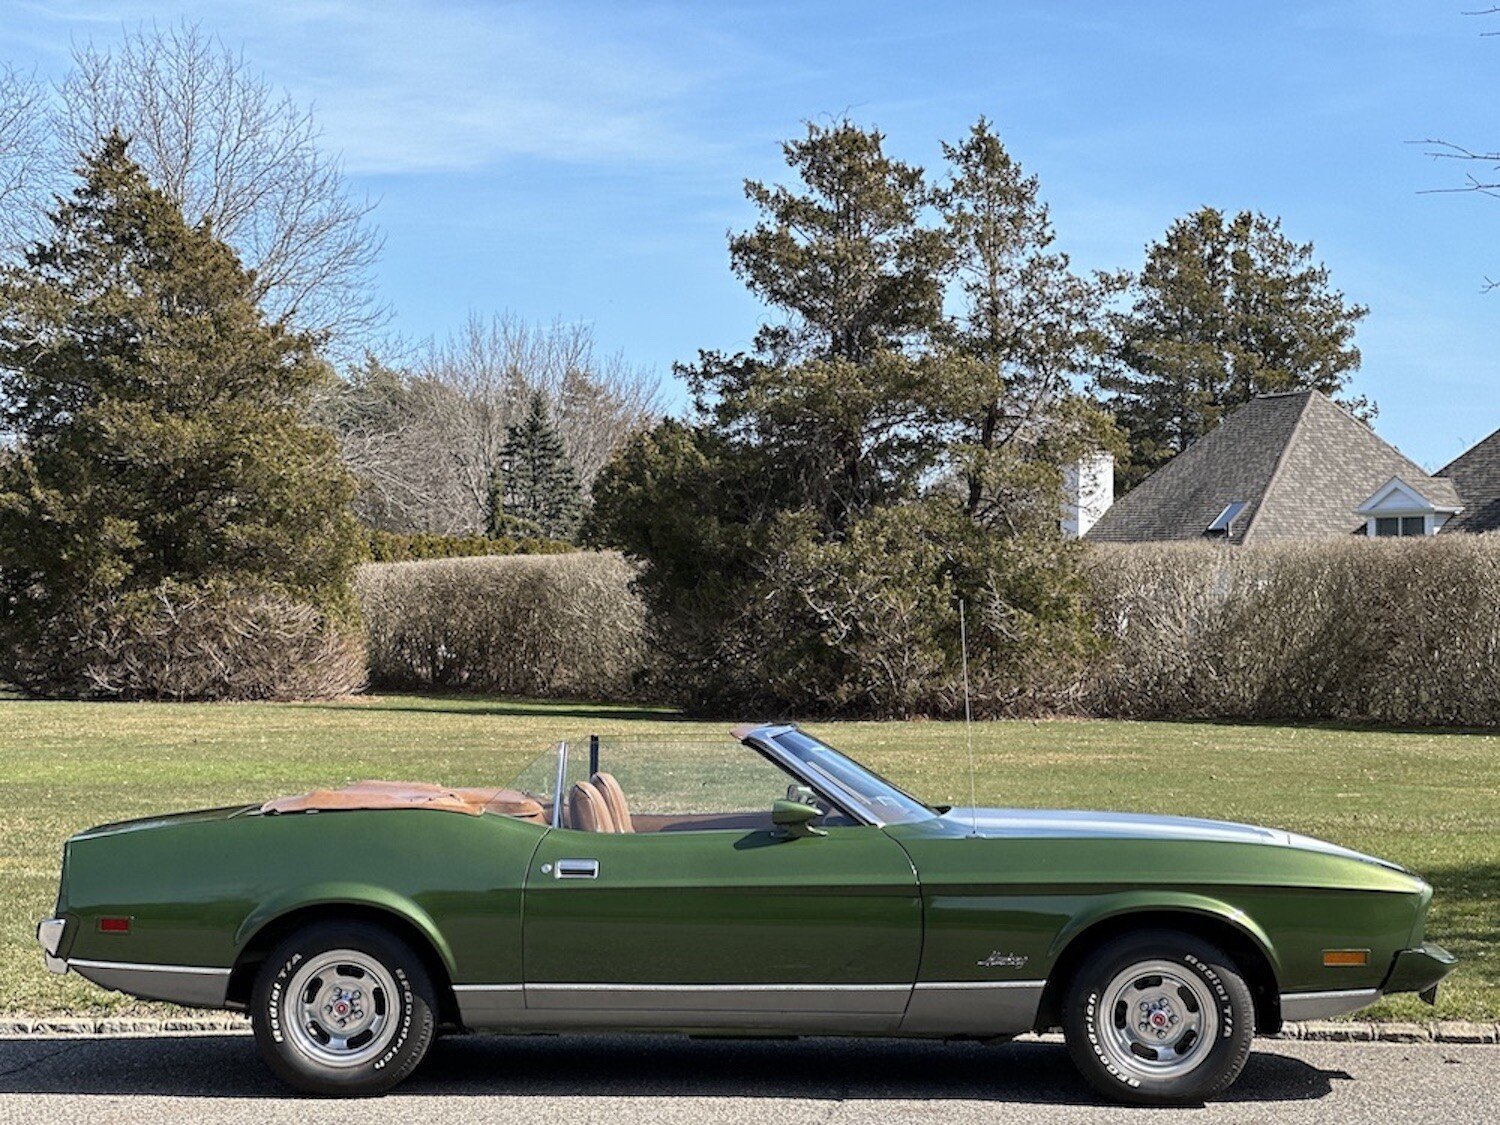 1973 Ford Mustang Classic Cars for Sale near Boston, Massachusetts